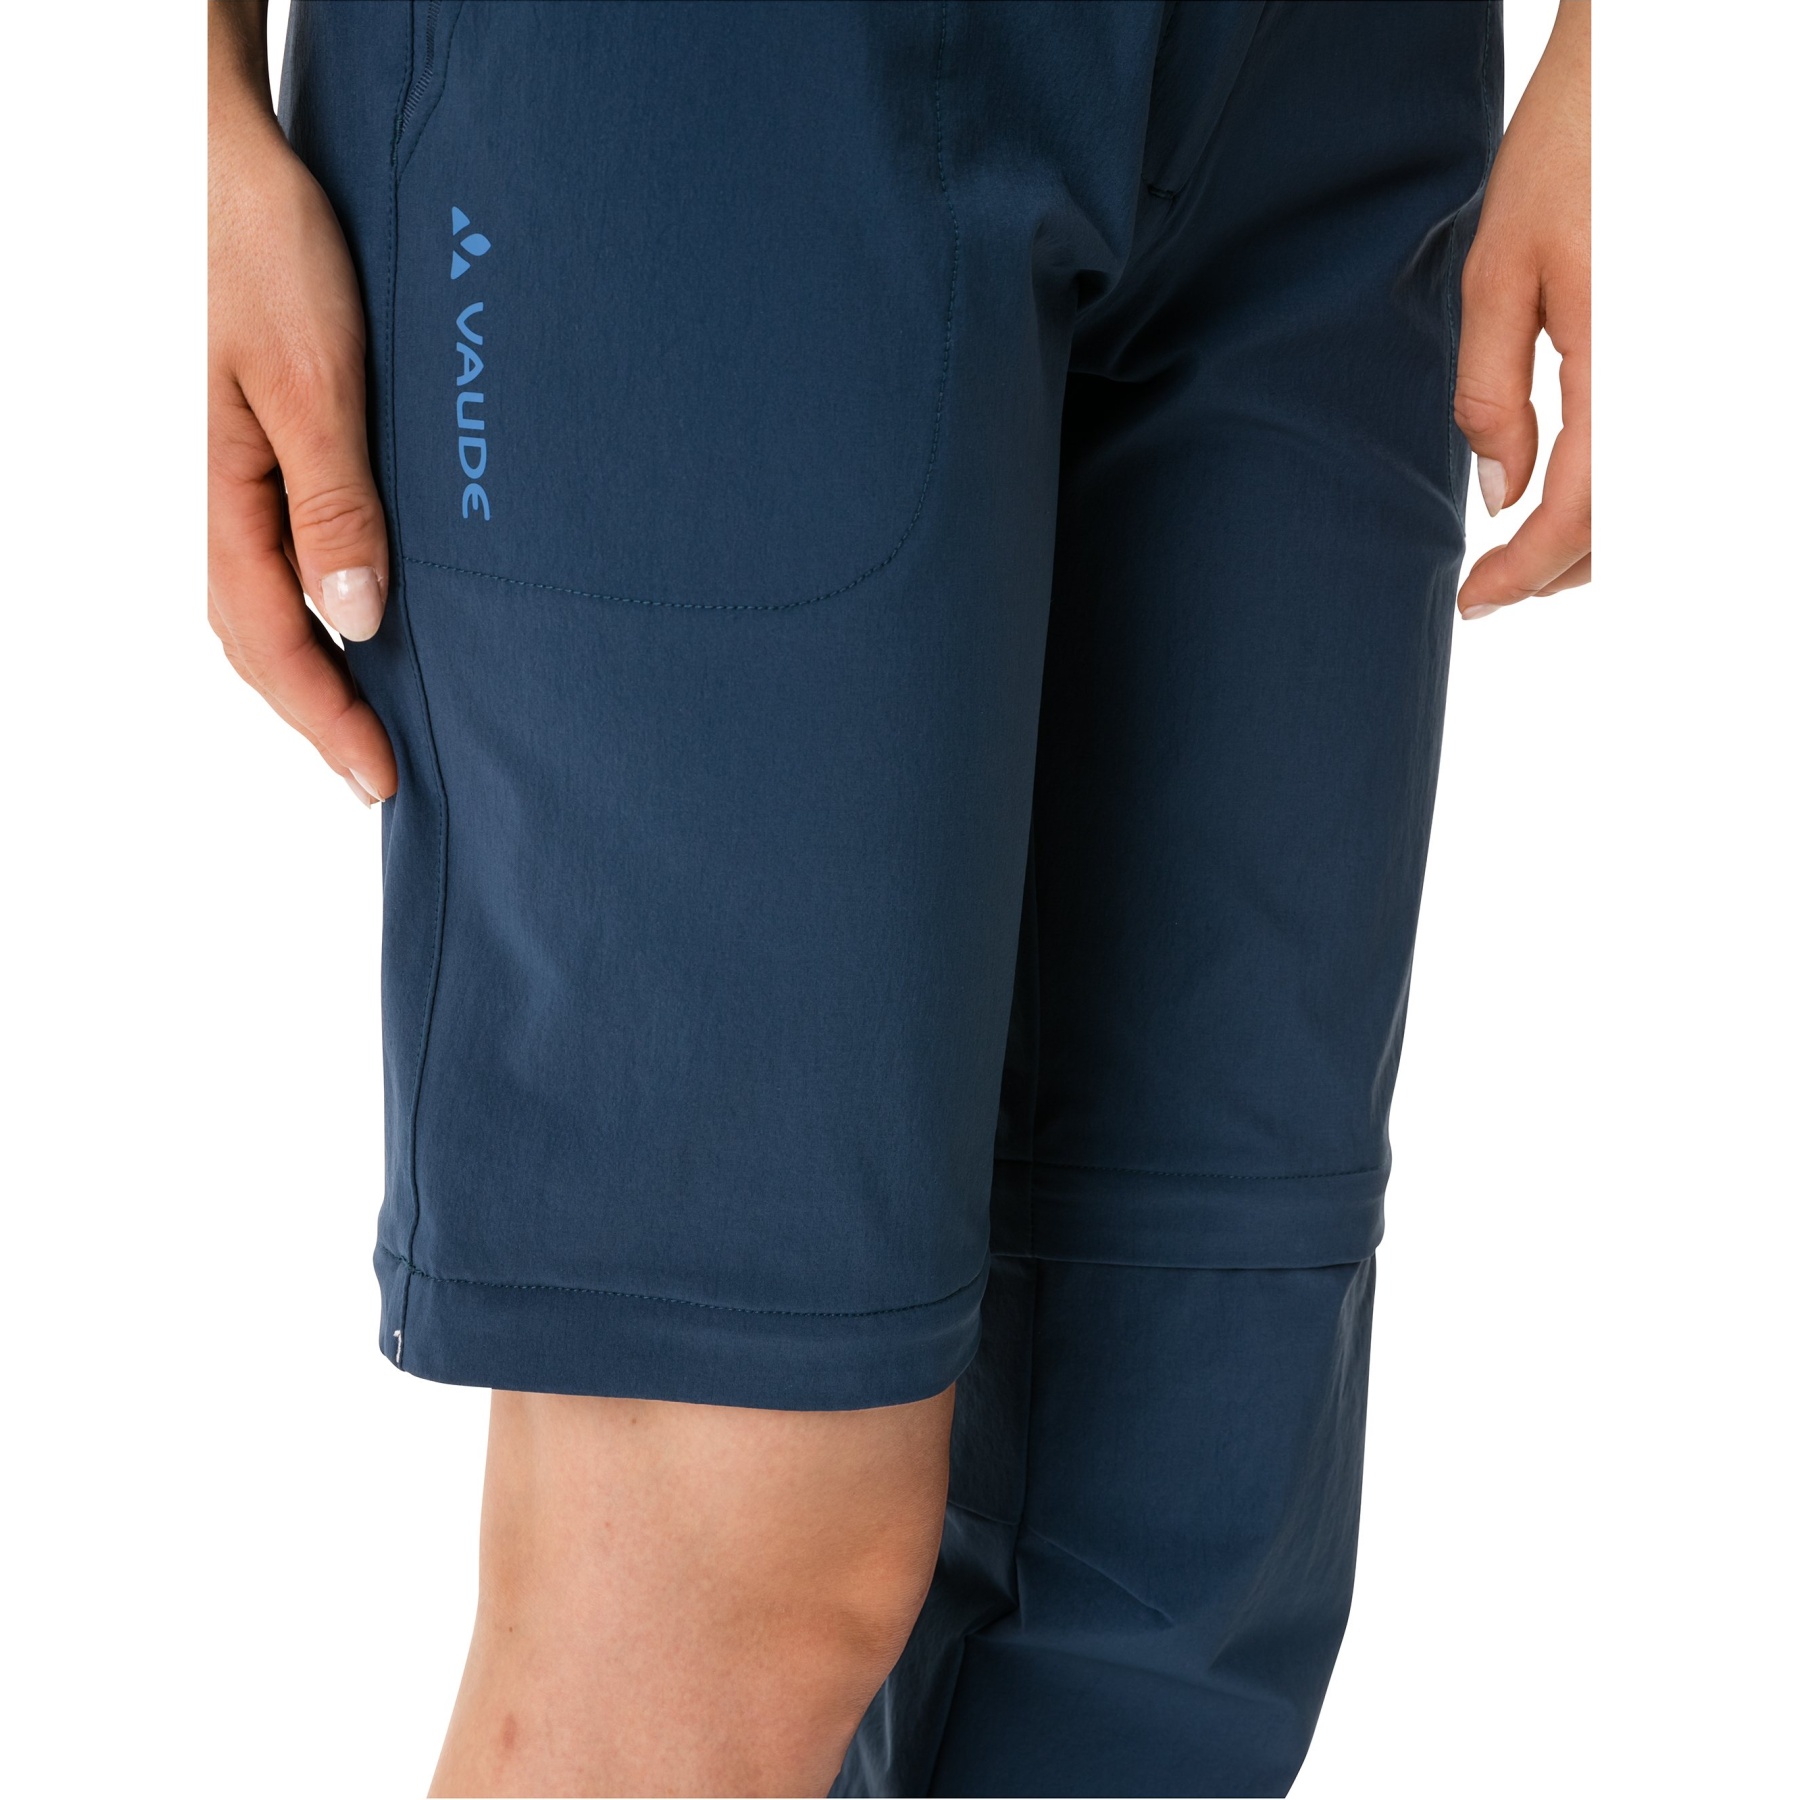 Farley Stretch III outdoor trousers women's